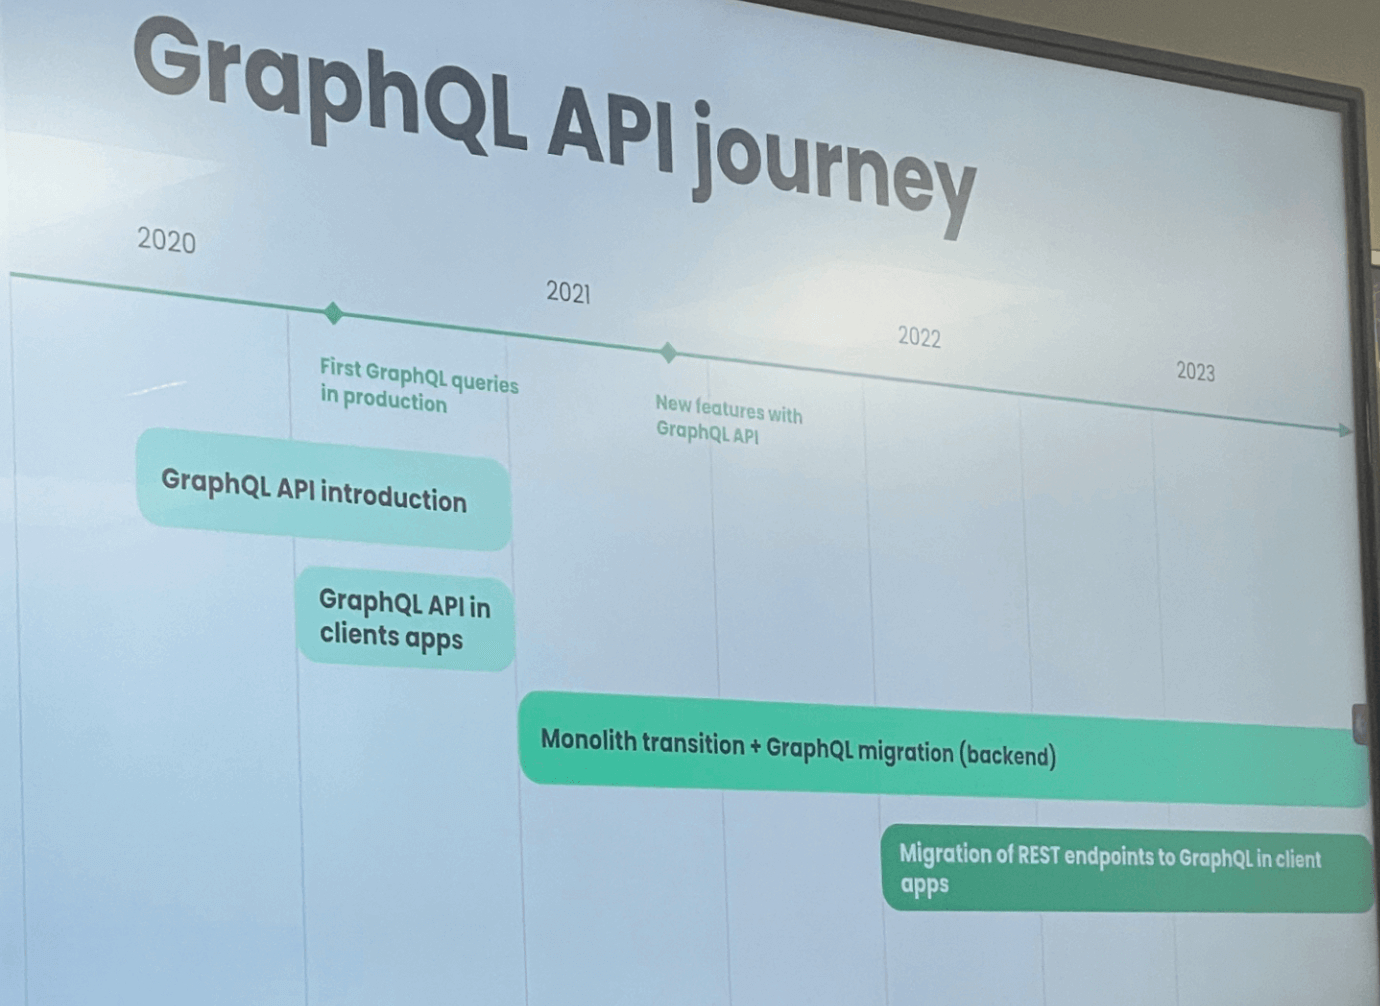 GraphQL API journey